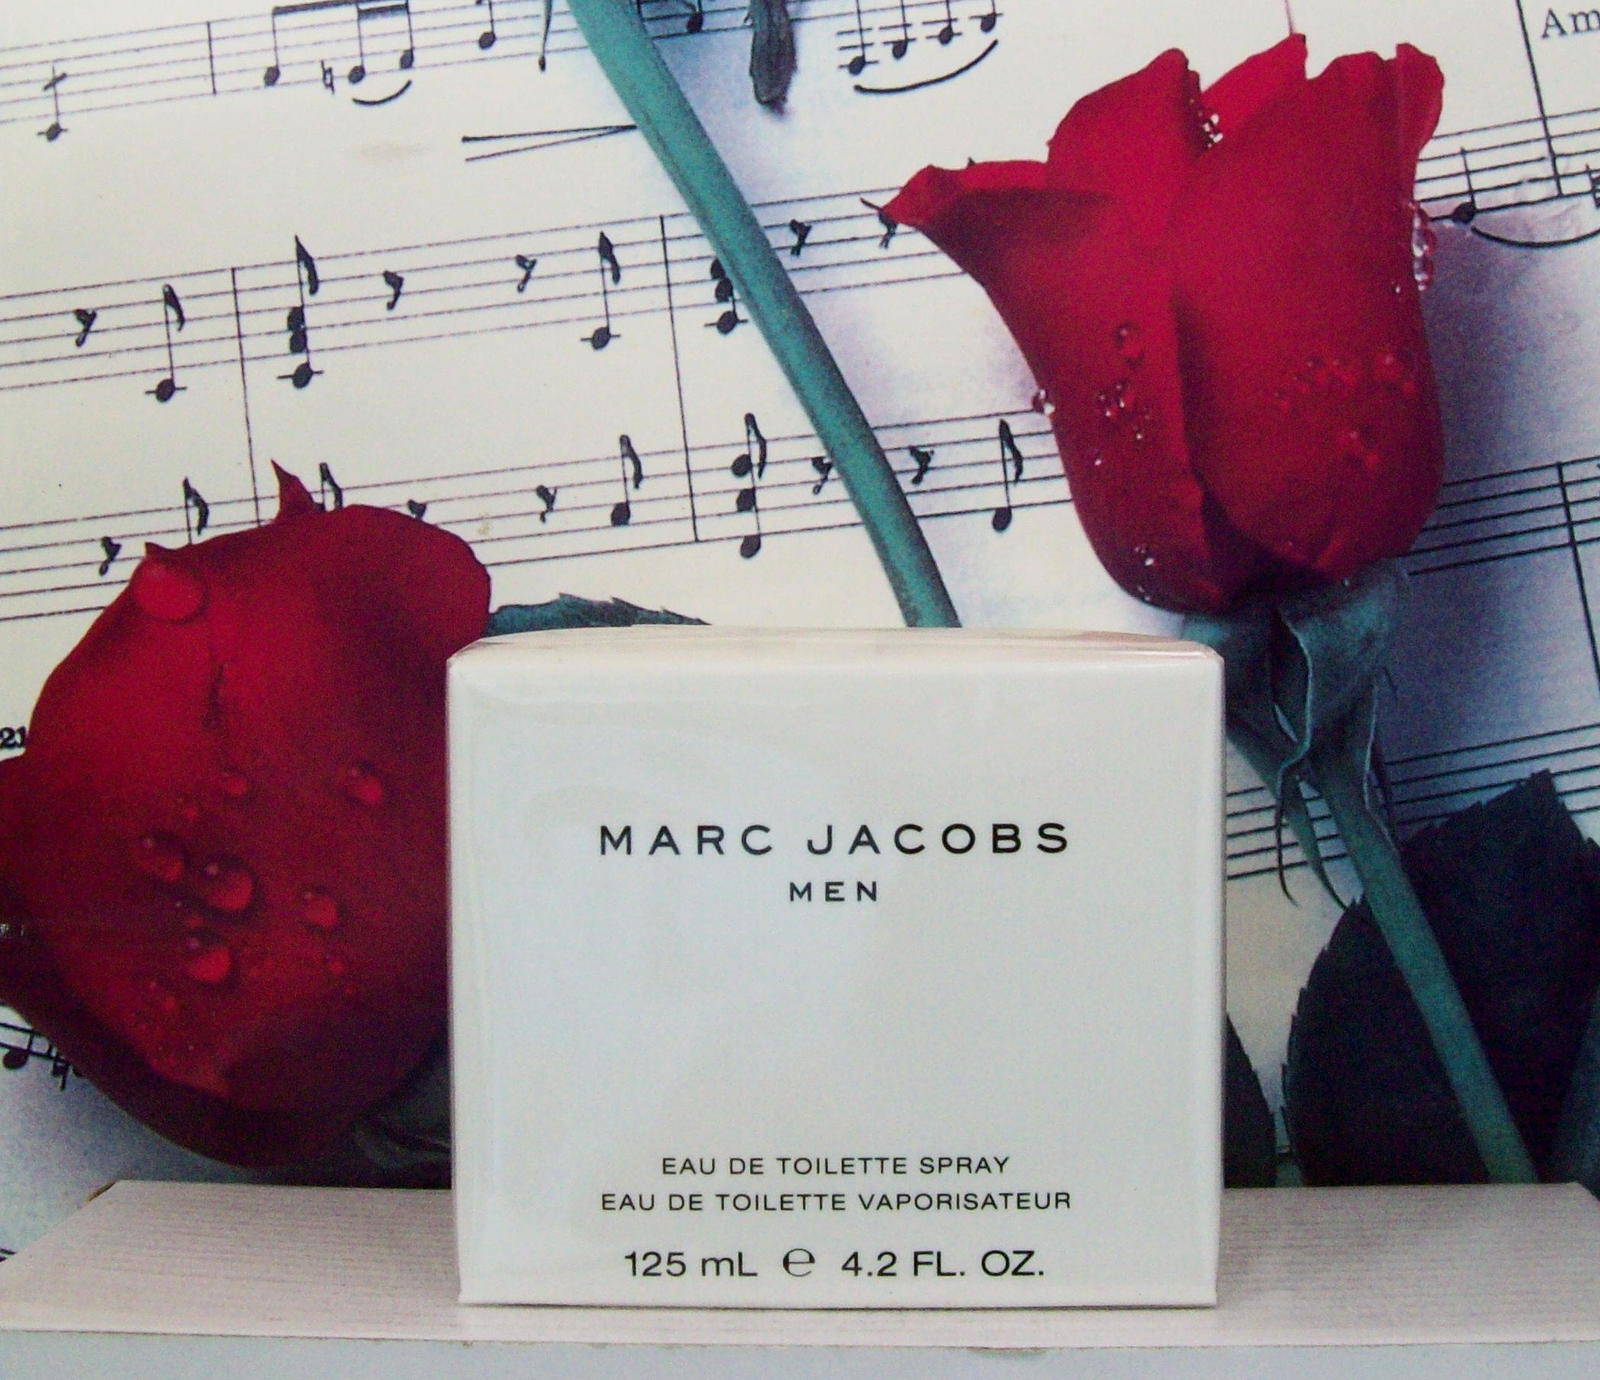 Primary image for Marc Jacobs Men EDT Spray 4.2 FL. OZ. 